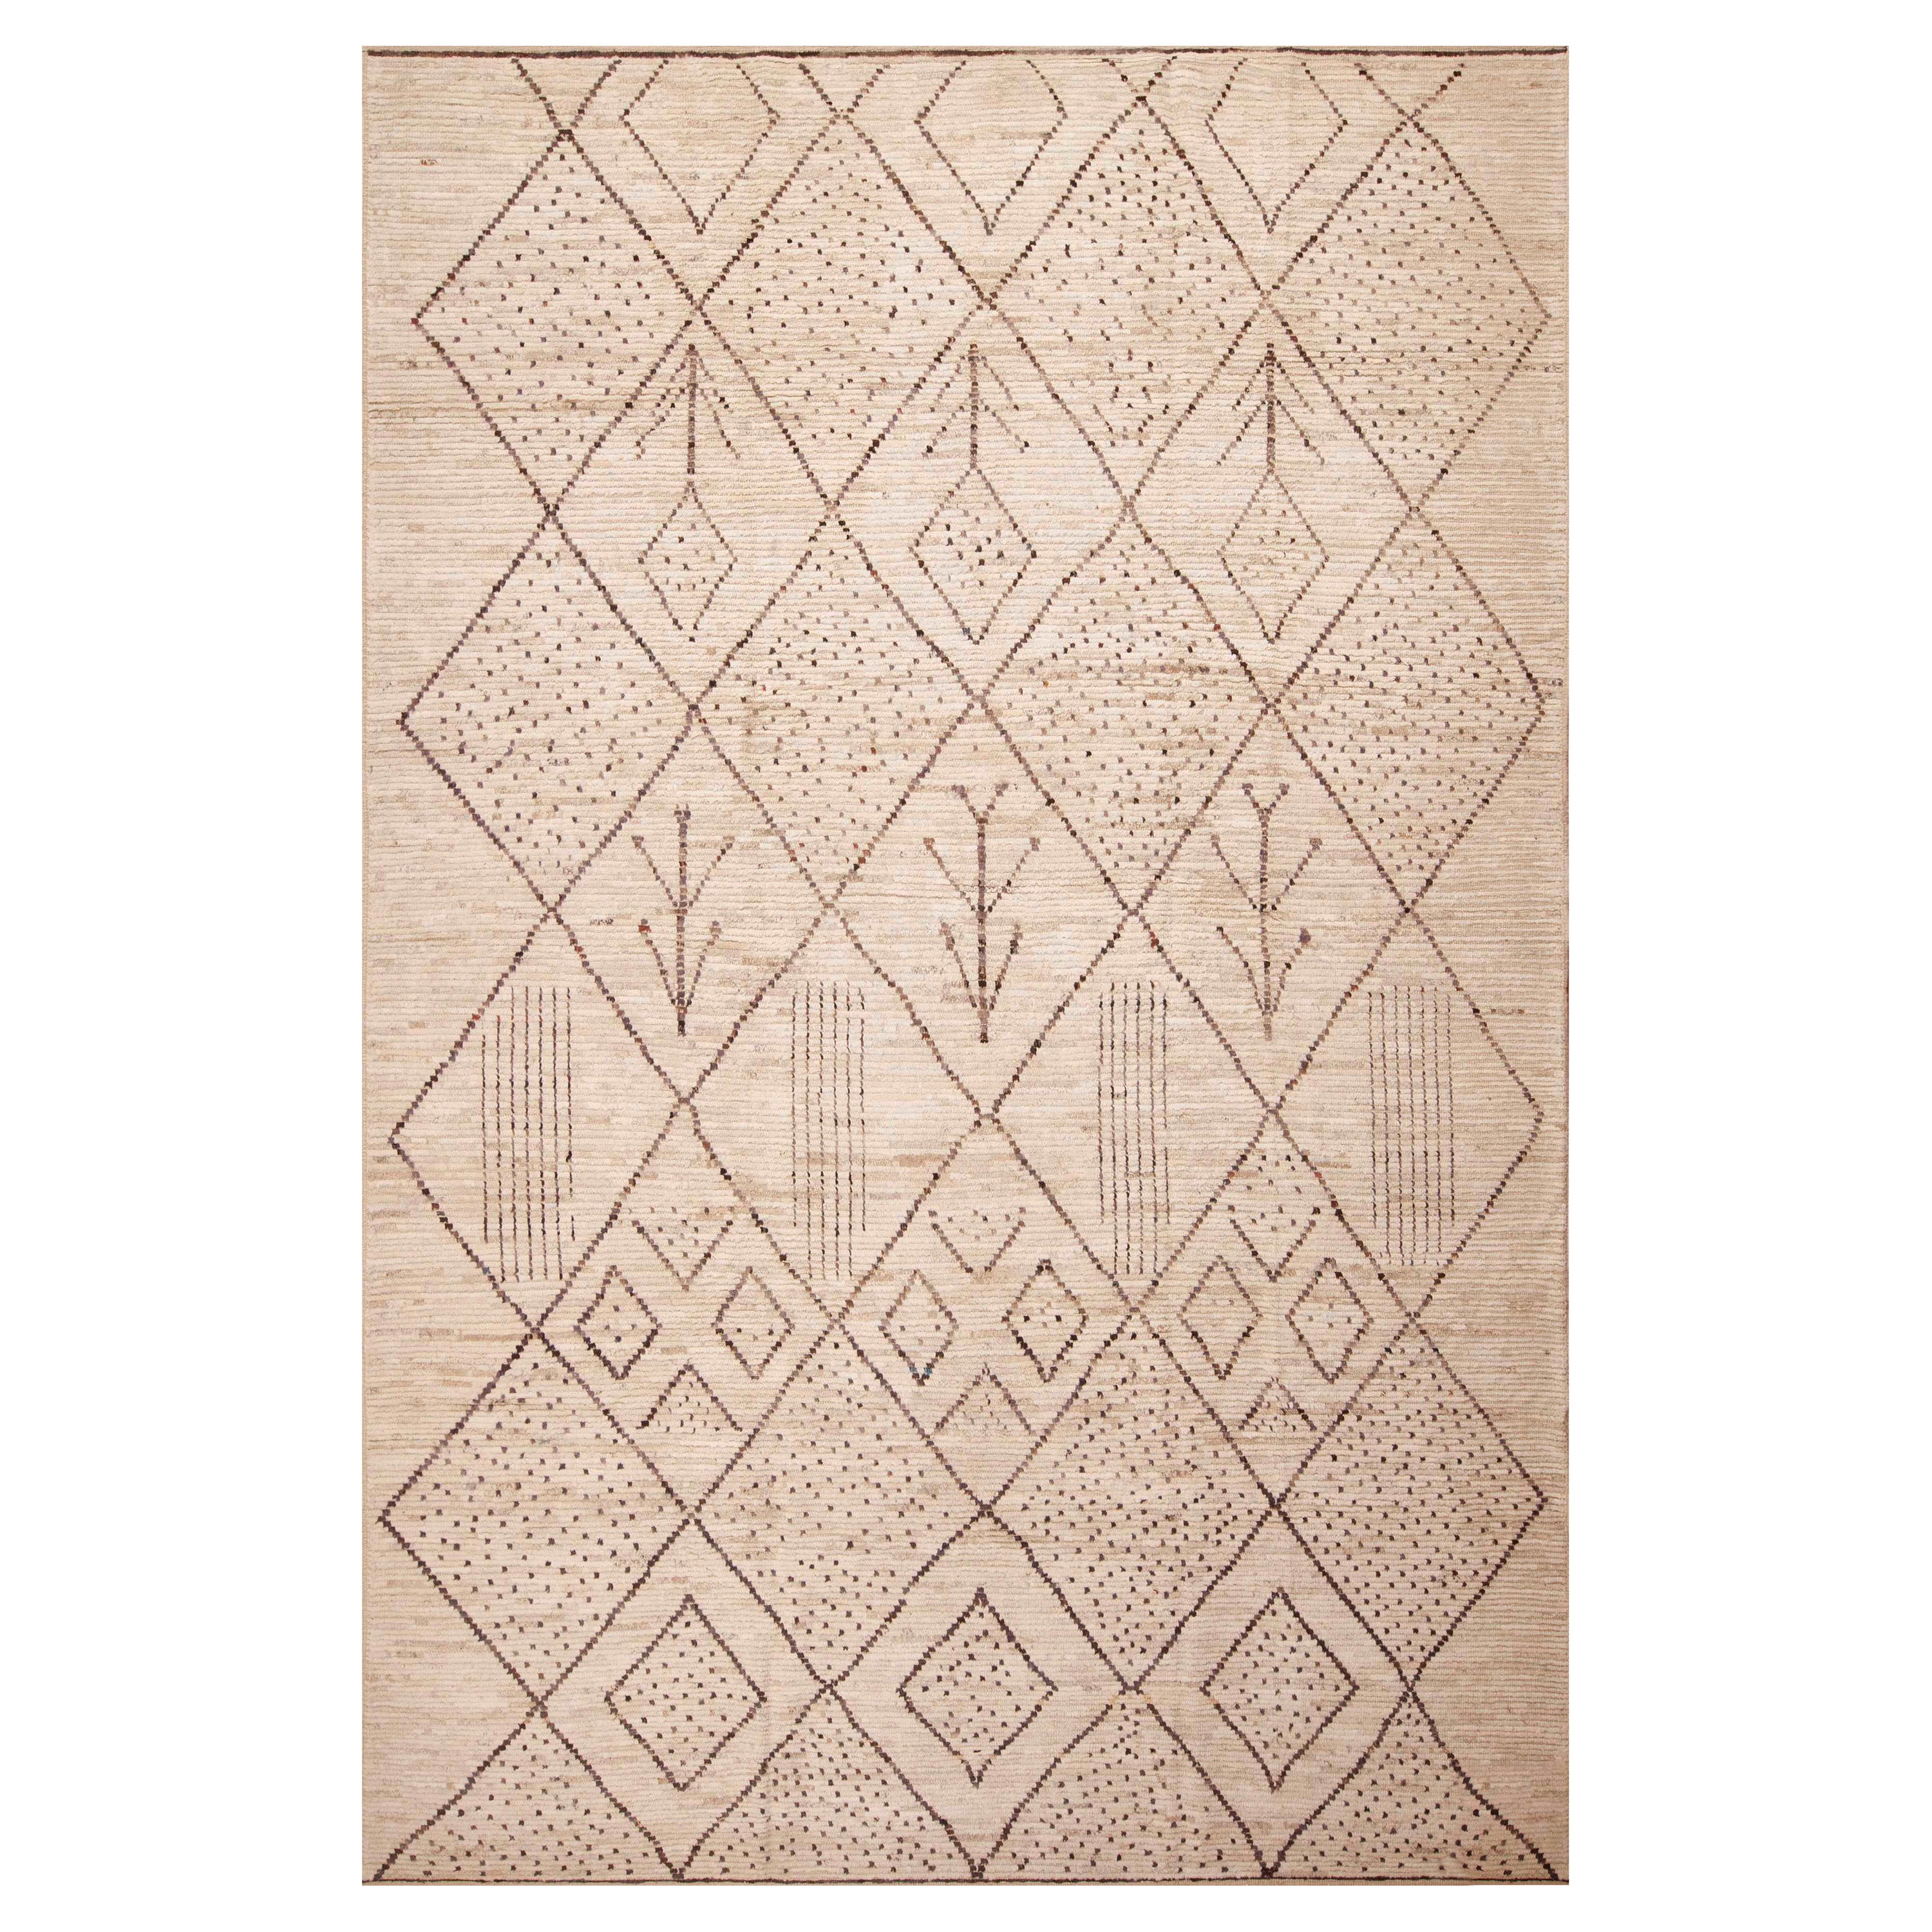 Nazmiyal Collection Tribal Moroccan Beni Ourain Design Modern Rug 14'6" x 9'9"